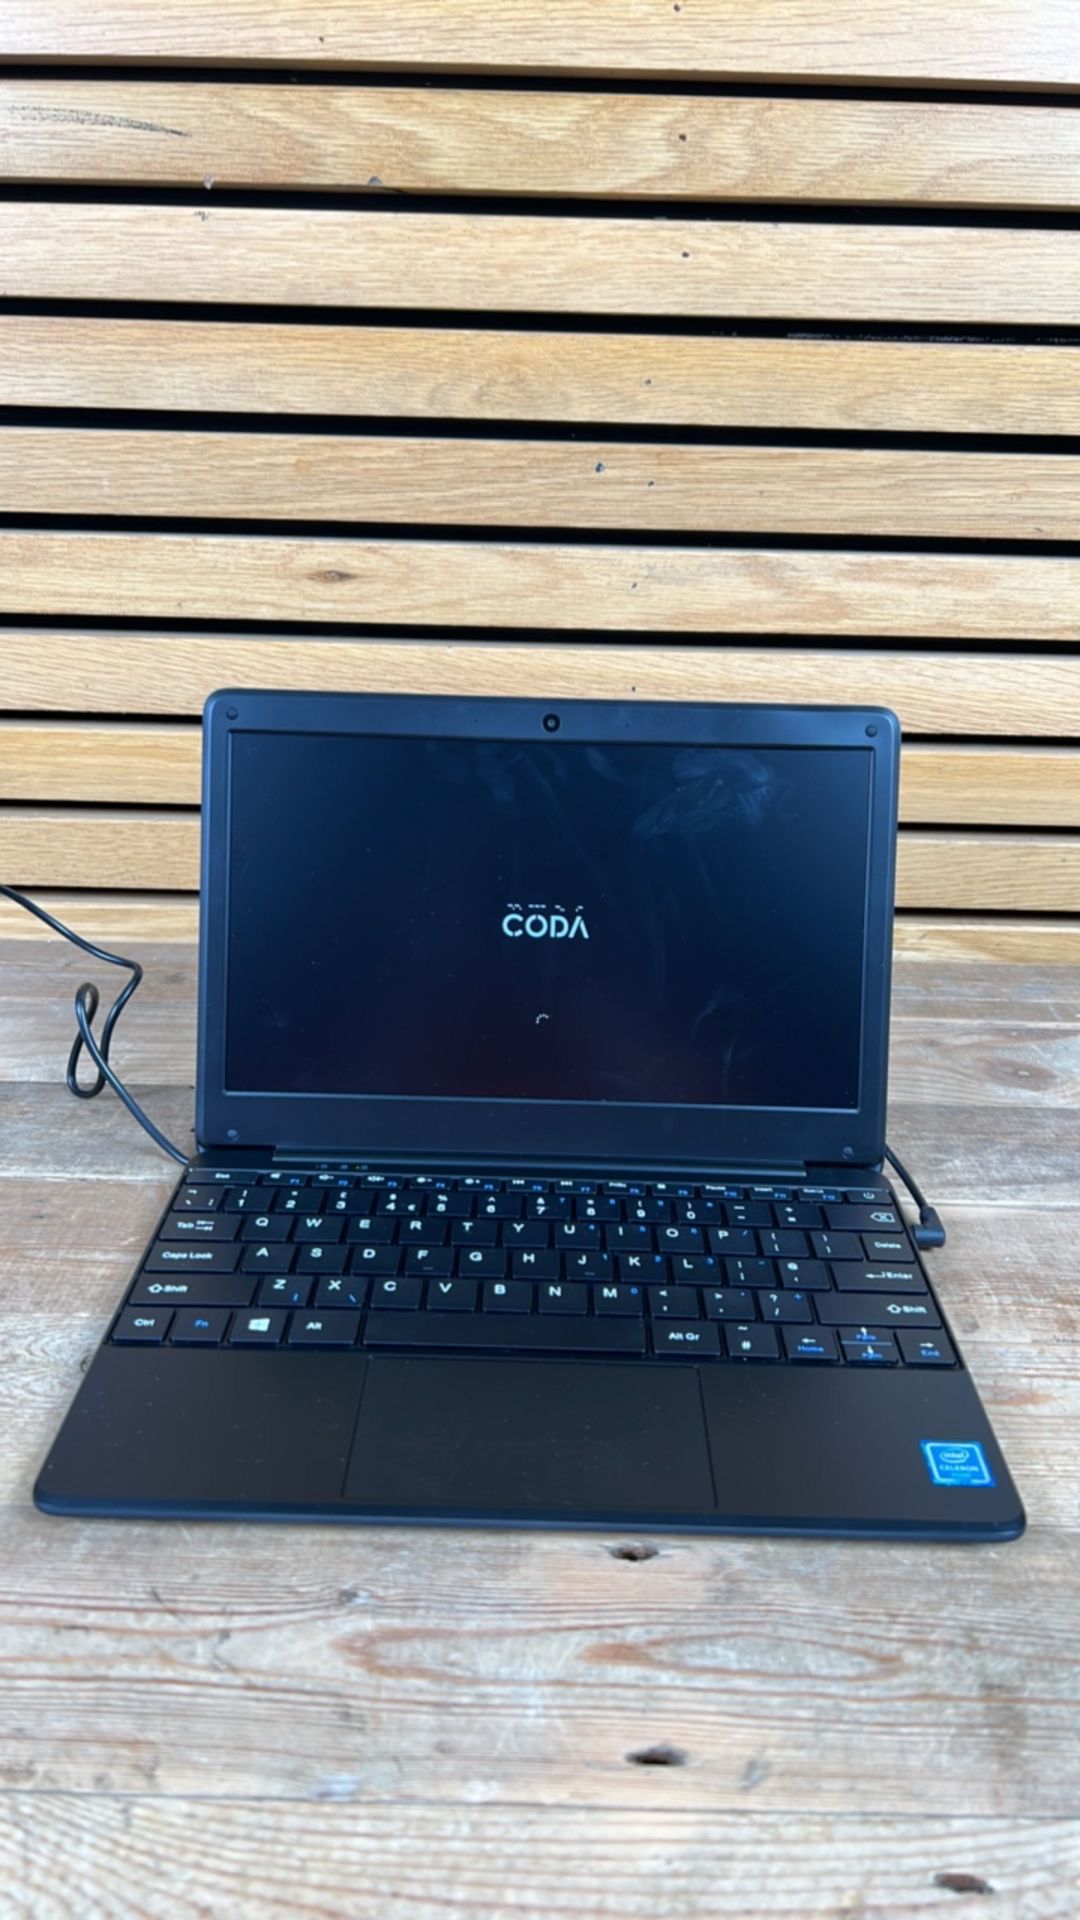 Coda 1.1 With Windows 10 - Image 2 of 5